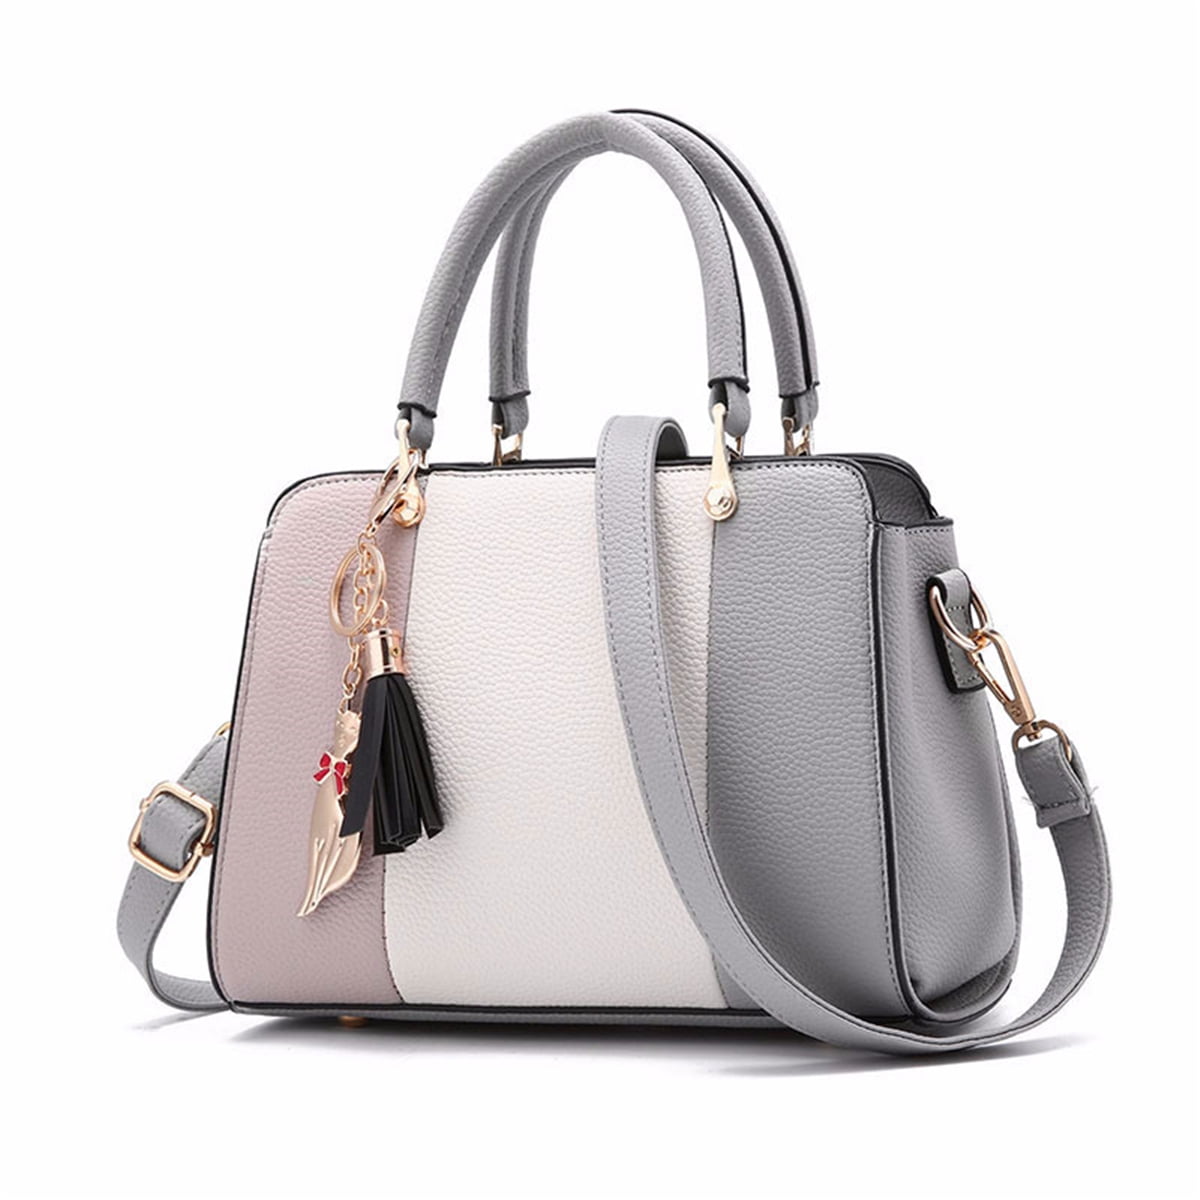 KUDOSALE - 2020 Fashion Women Casual Leather Handbag Shoulder Bag Lady Evening Tassels Tote ...